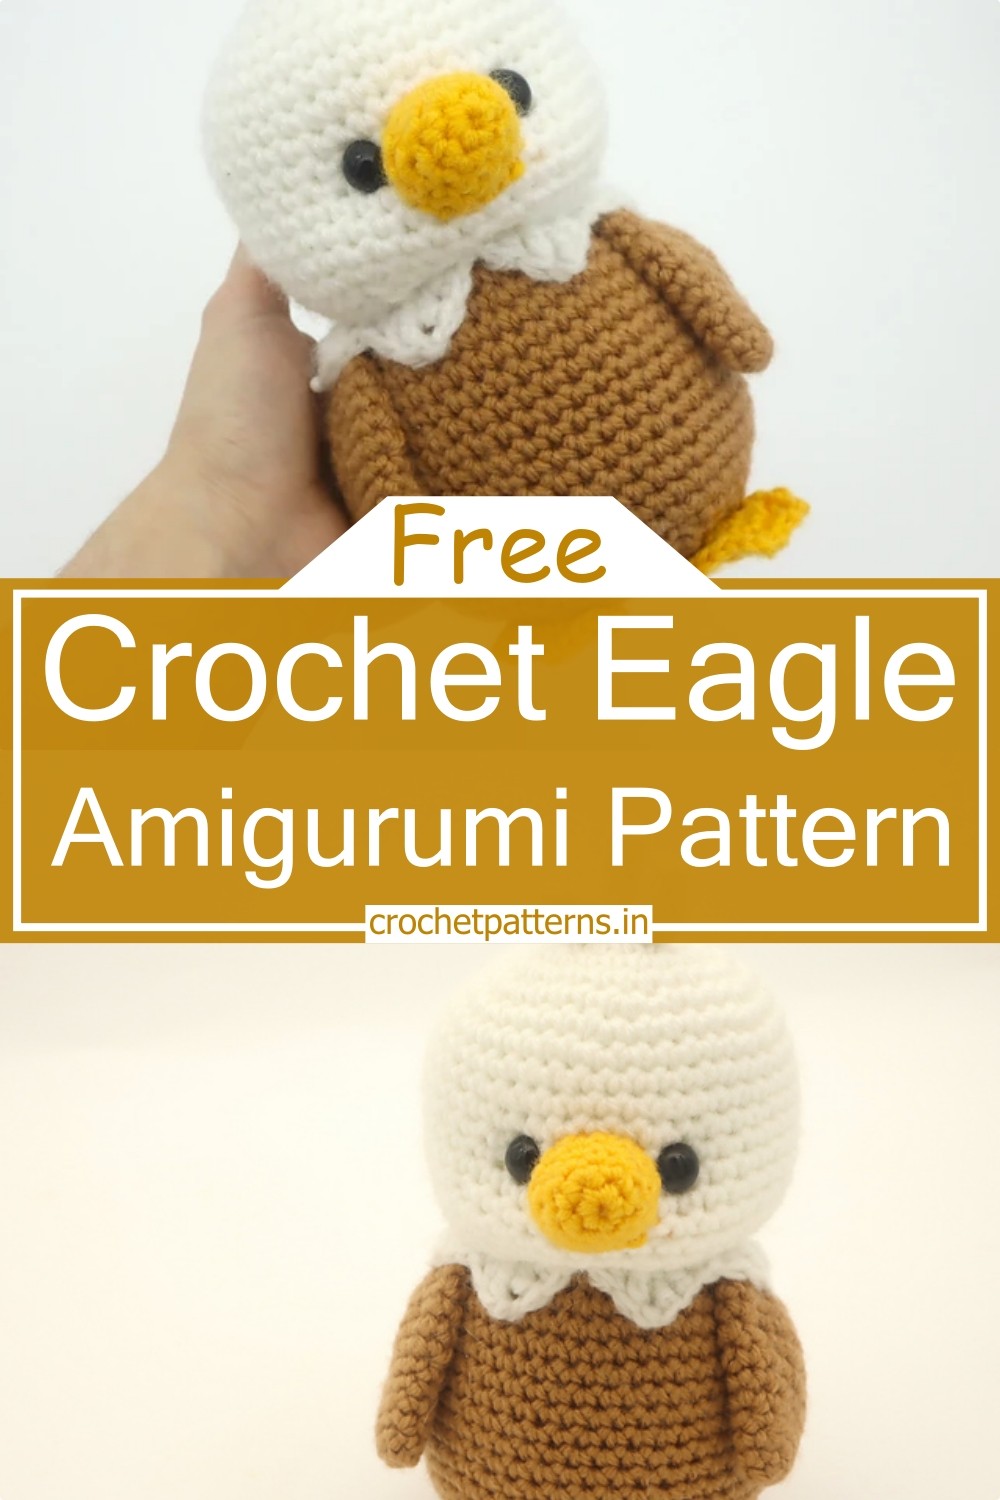 Crochet Eagle Amigurumi Pattern